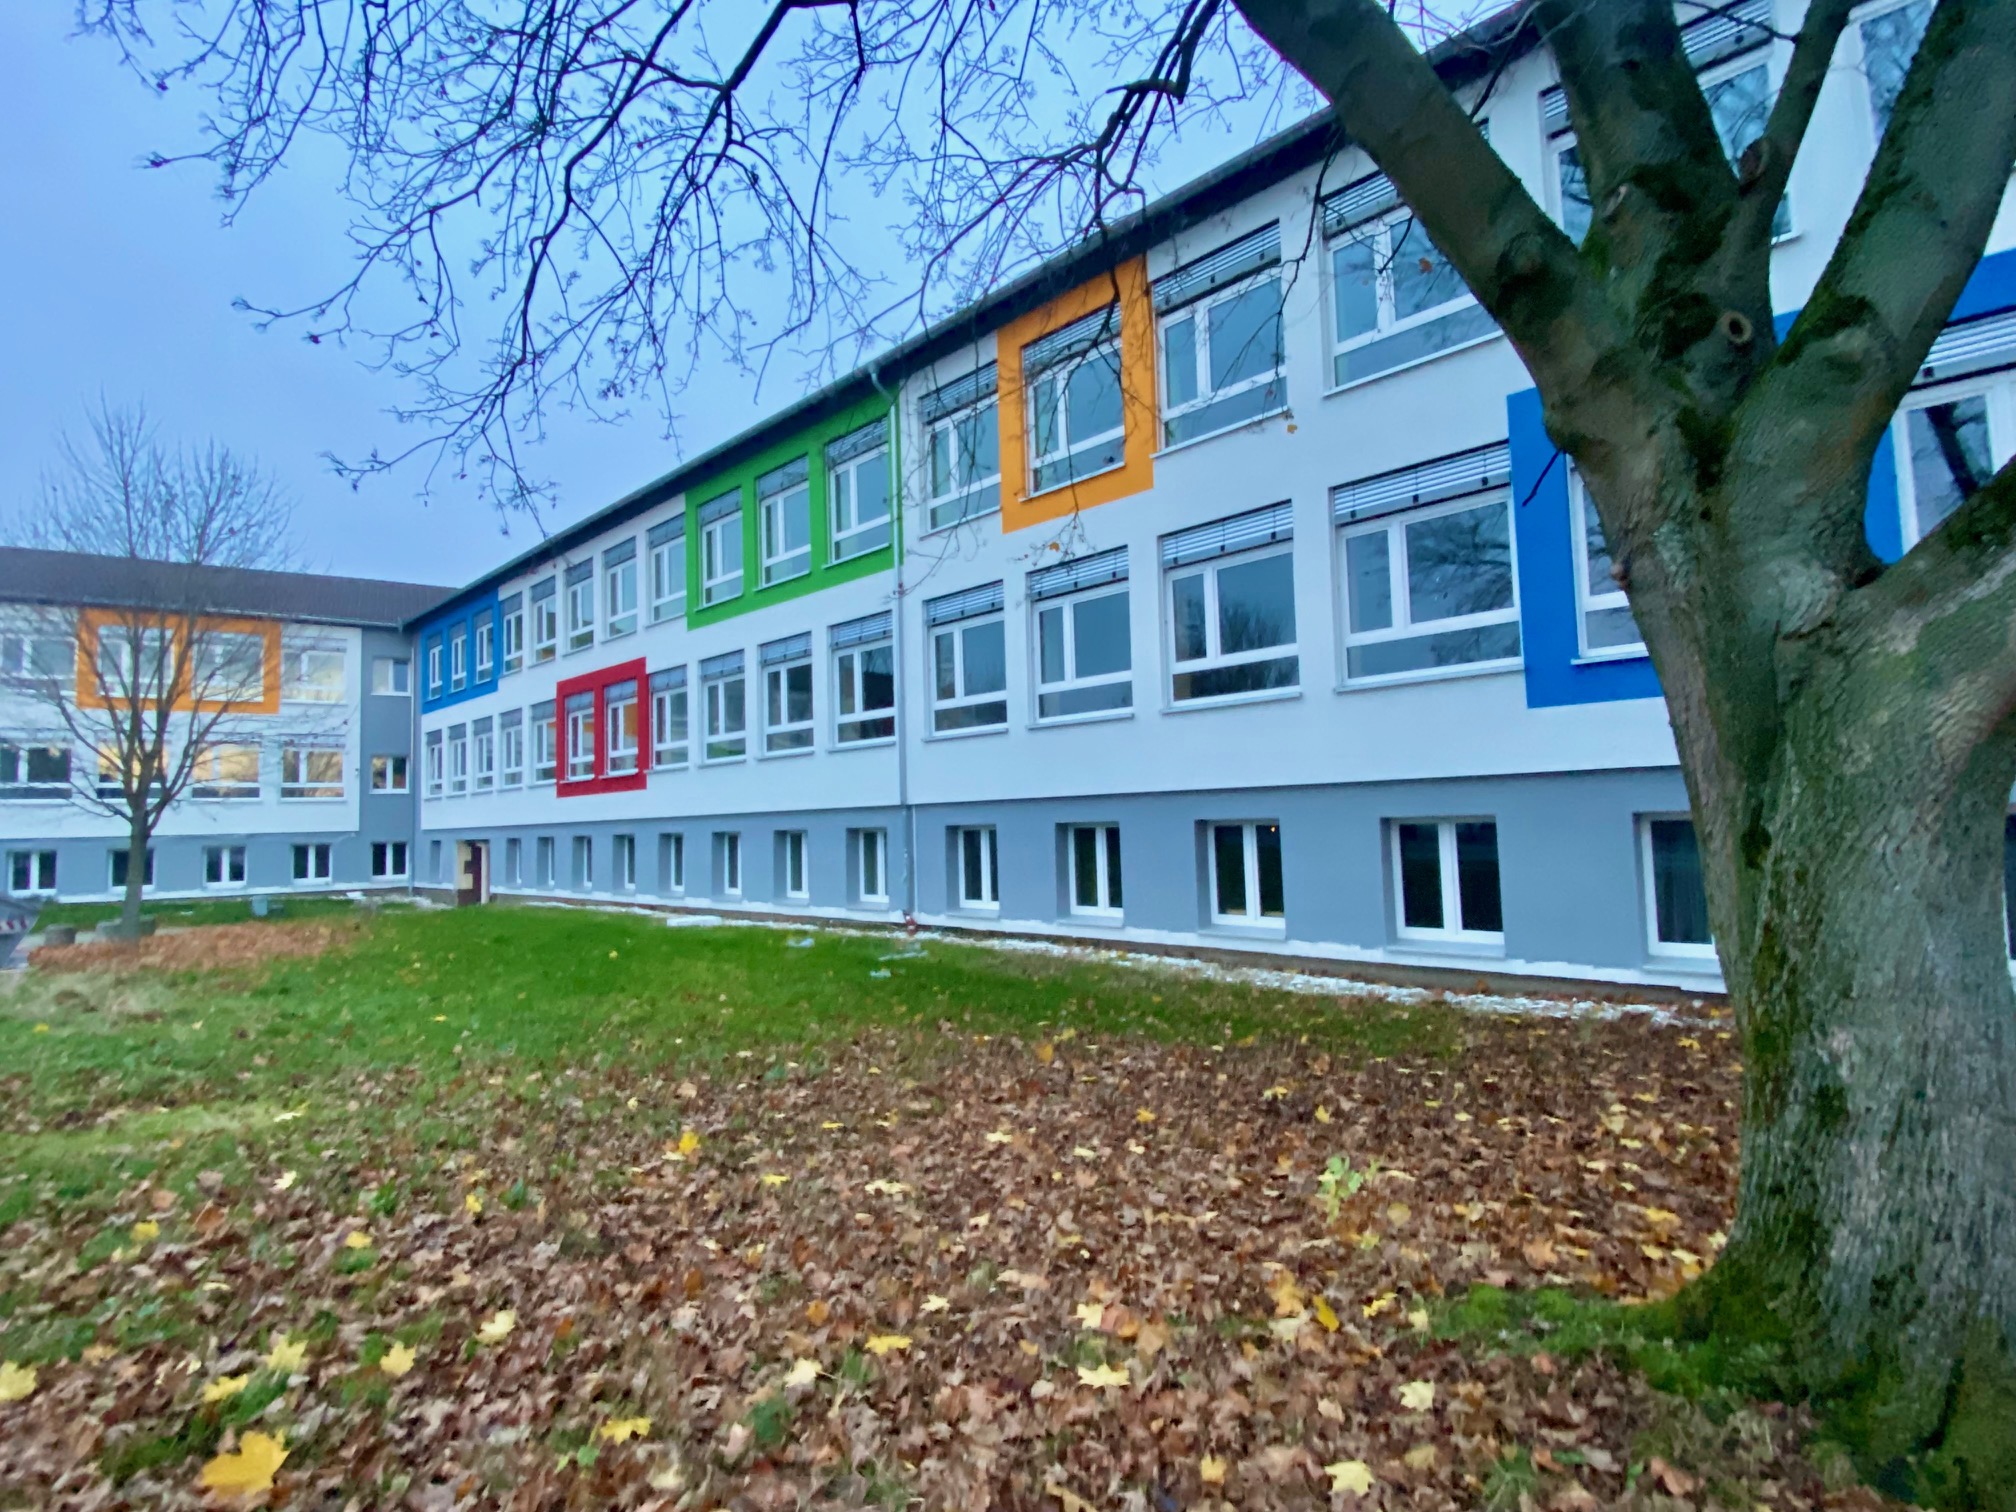 Foto: Neue Gesamtschule in Ickern